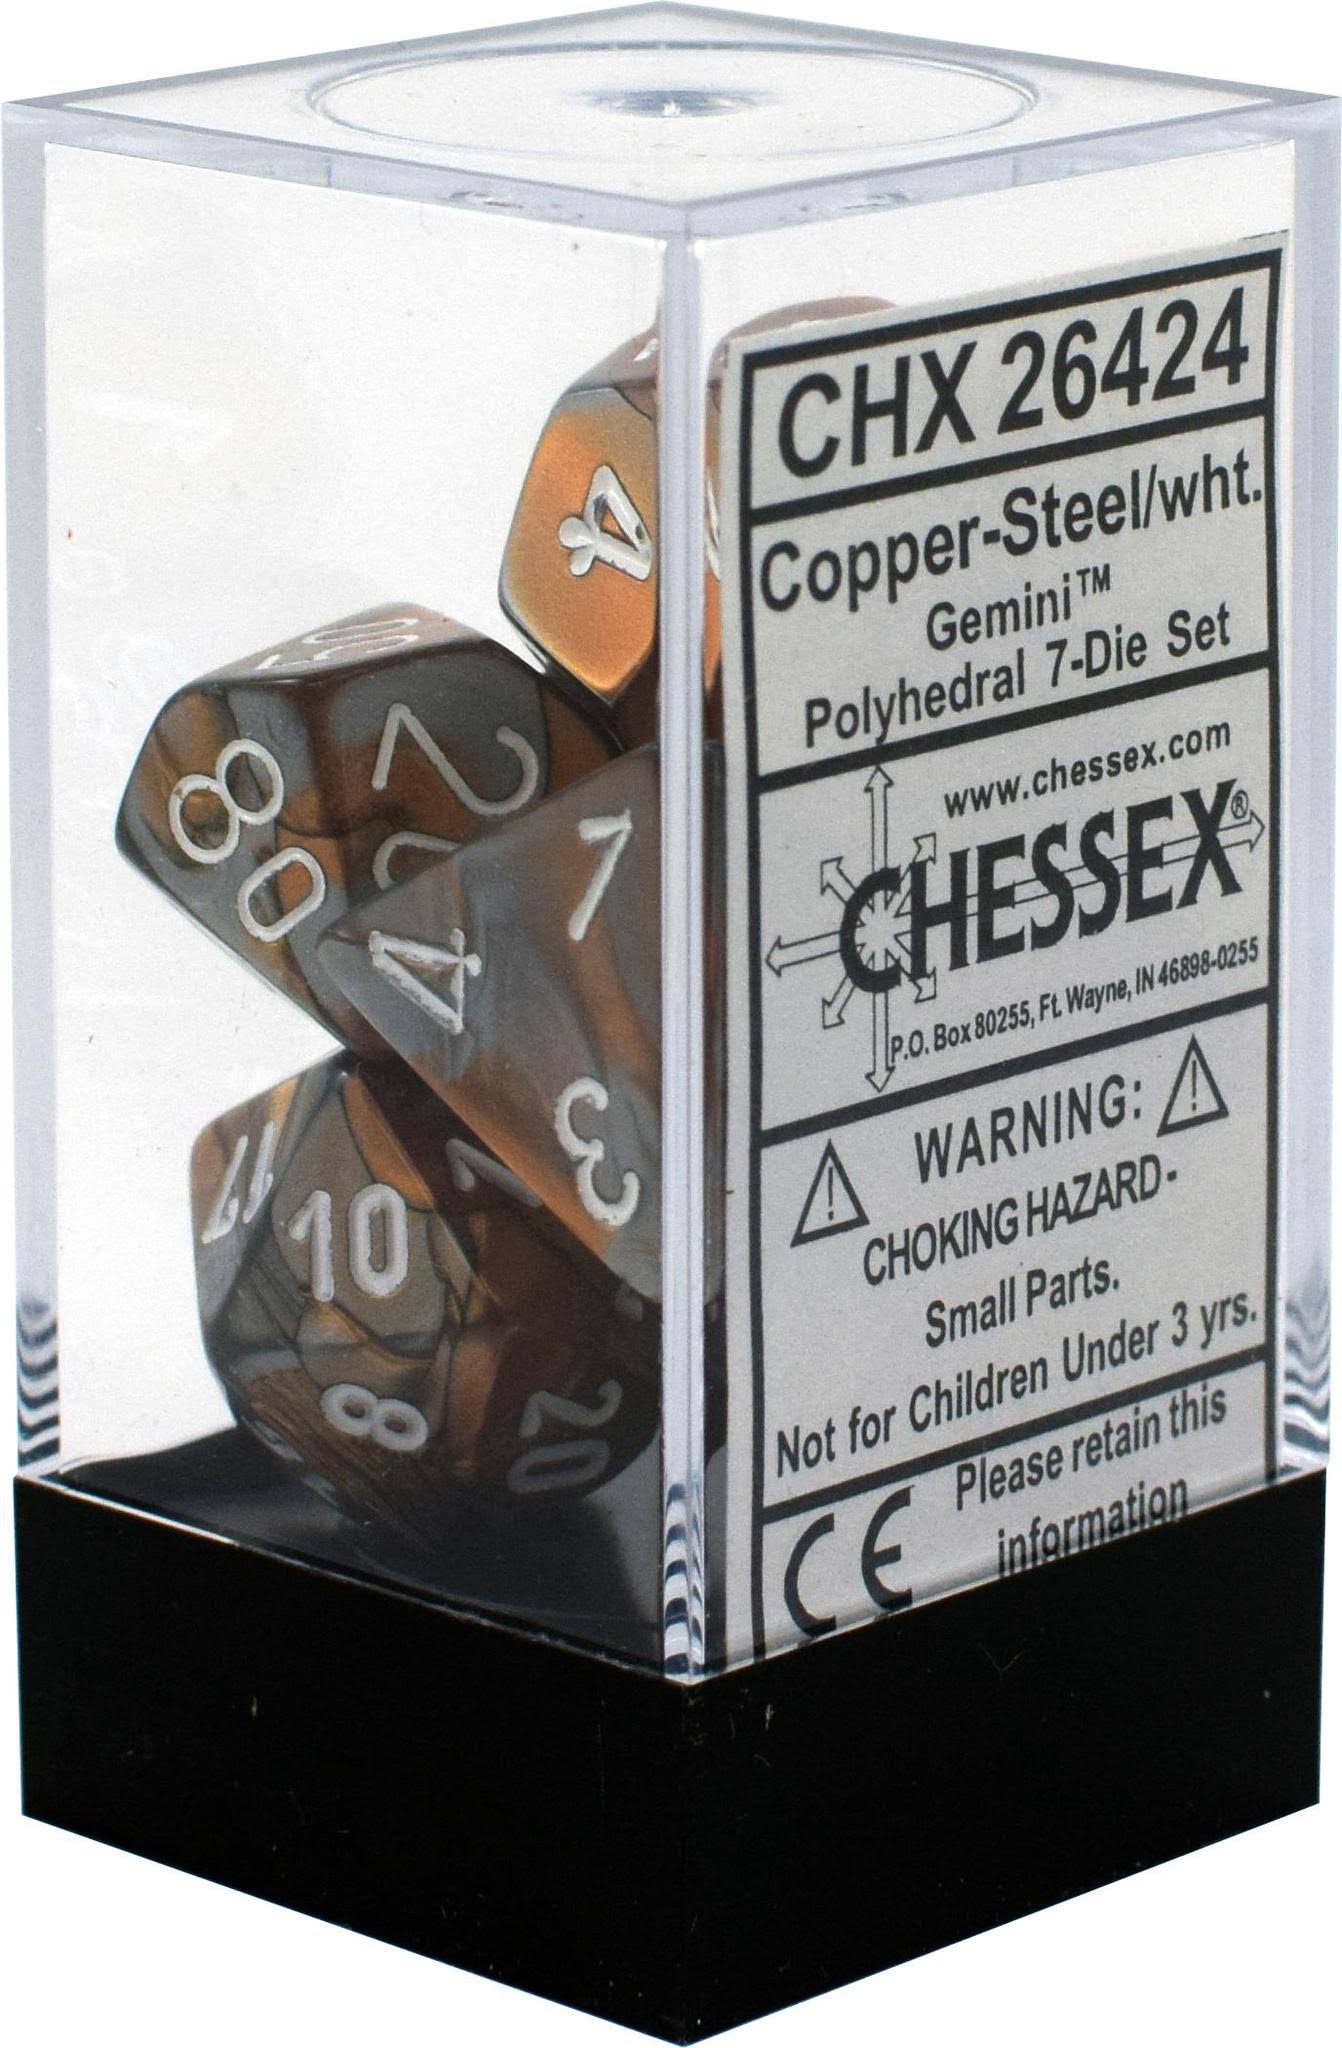 Chessex - 7 Die Set Copper Steel/White Gemini